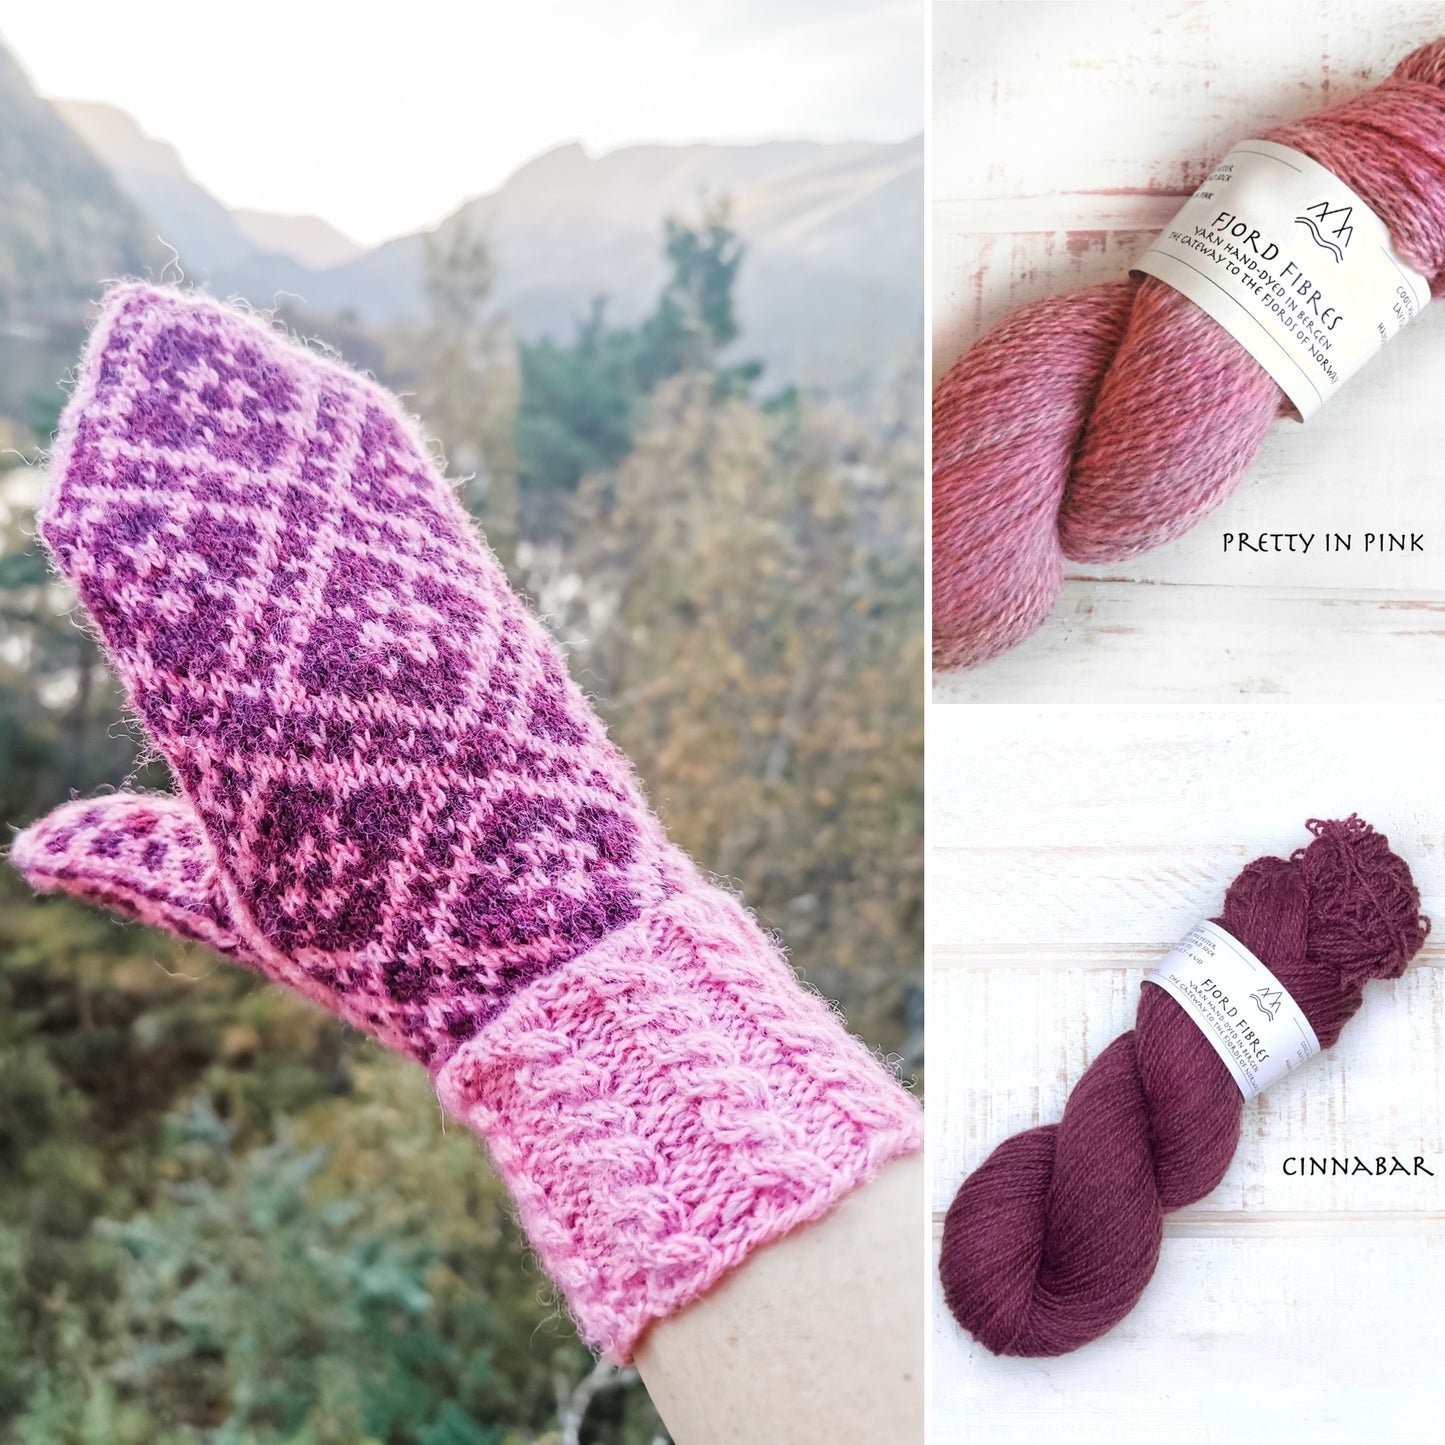 Fleur Élise Mittens Kit - Cinnabar/Pretty´n Pink - 2 x 50g yarn and Printed Pattern in English/Norwegian